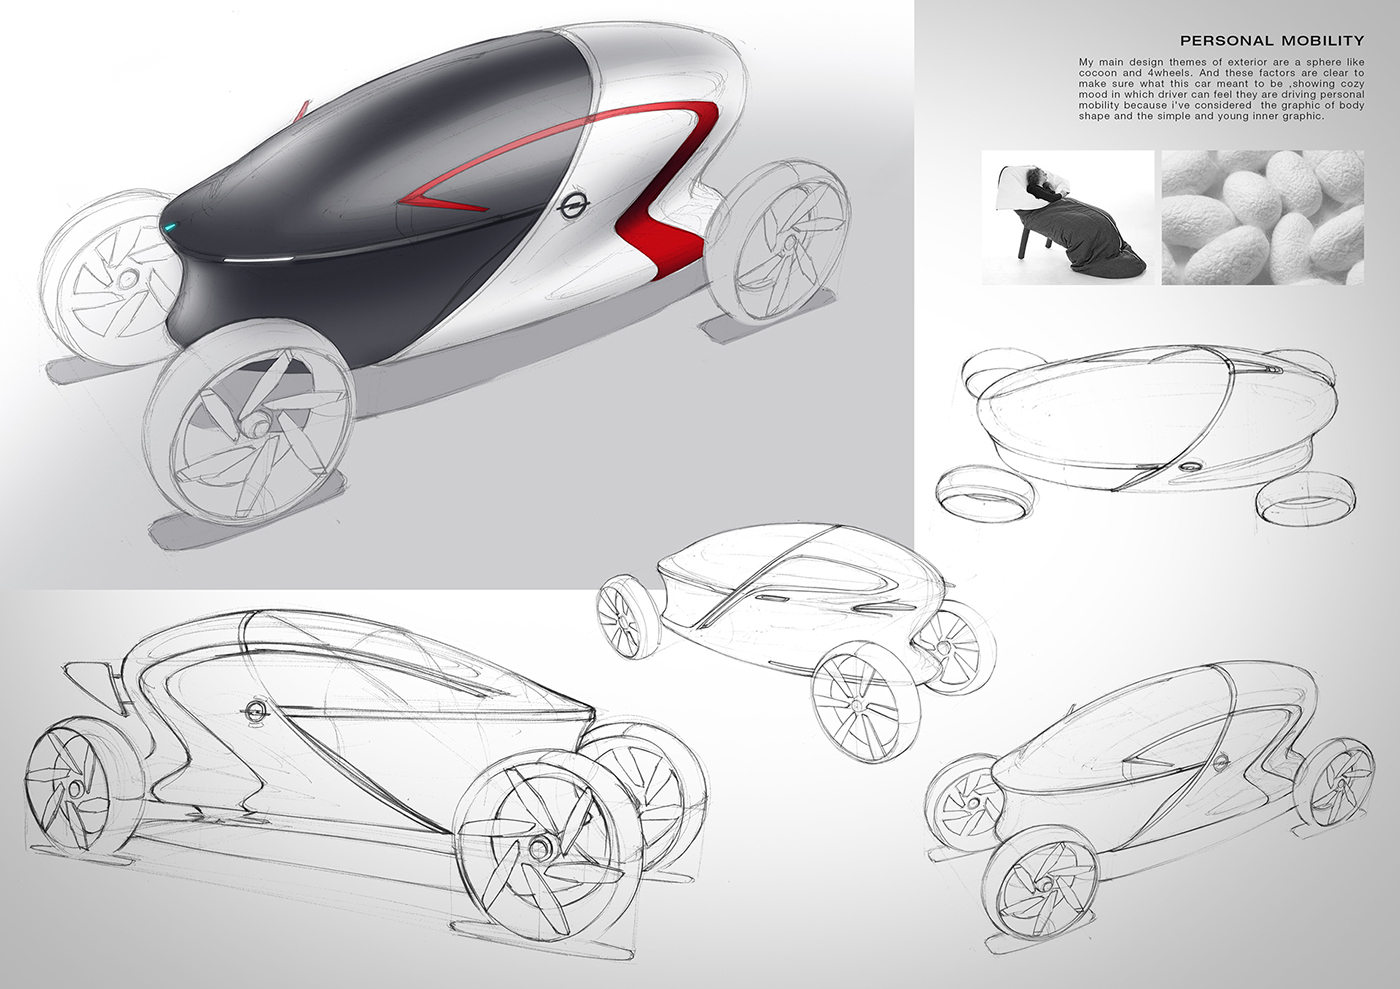 opel pelican,概念车,草图,自动化设计